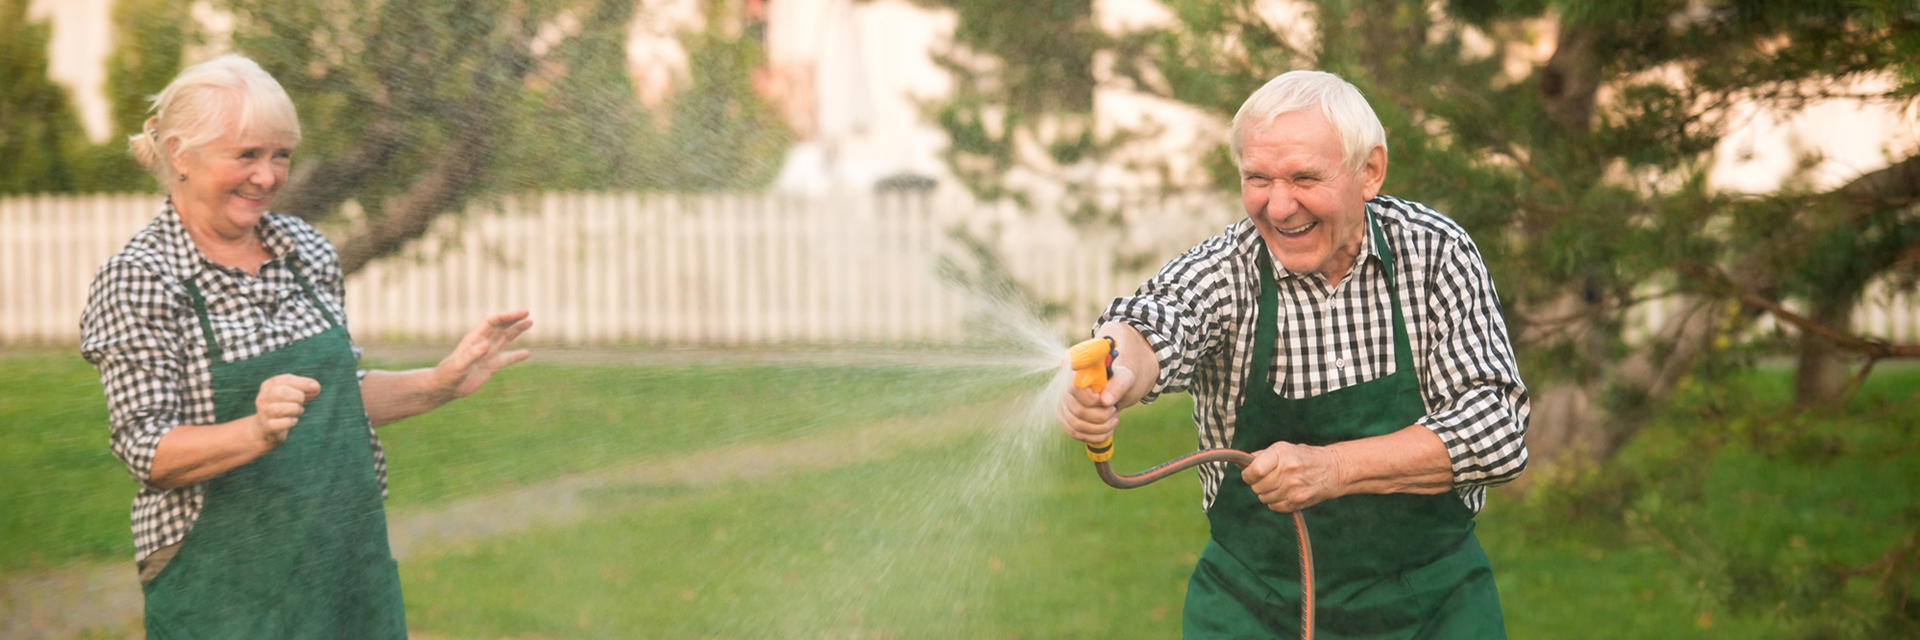 Happy Senior Couple having fun with water hose